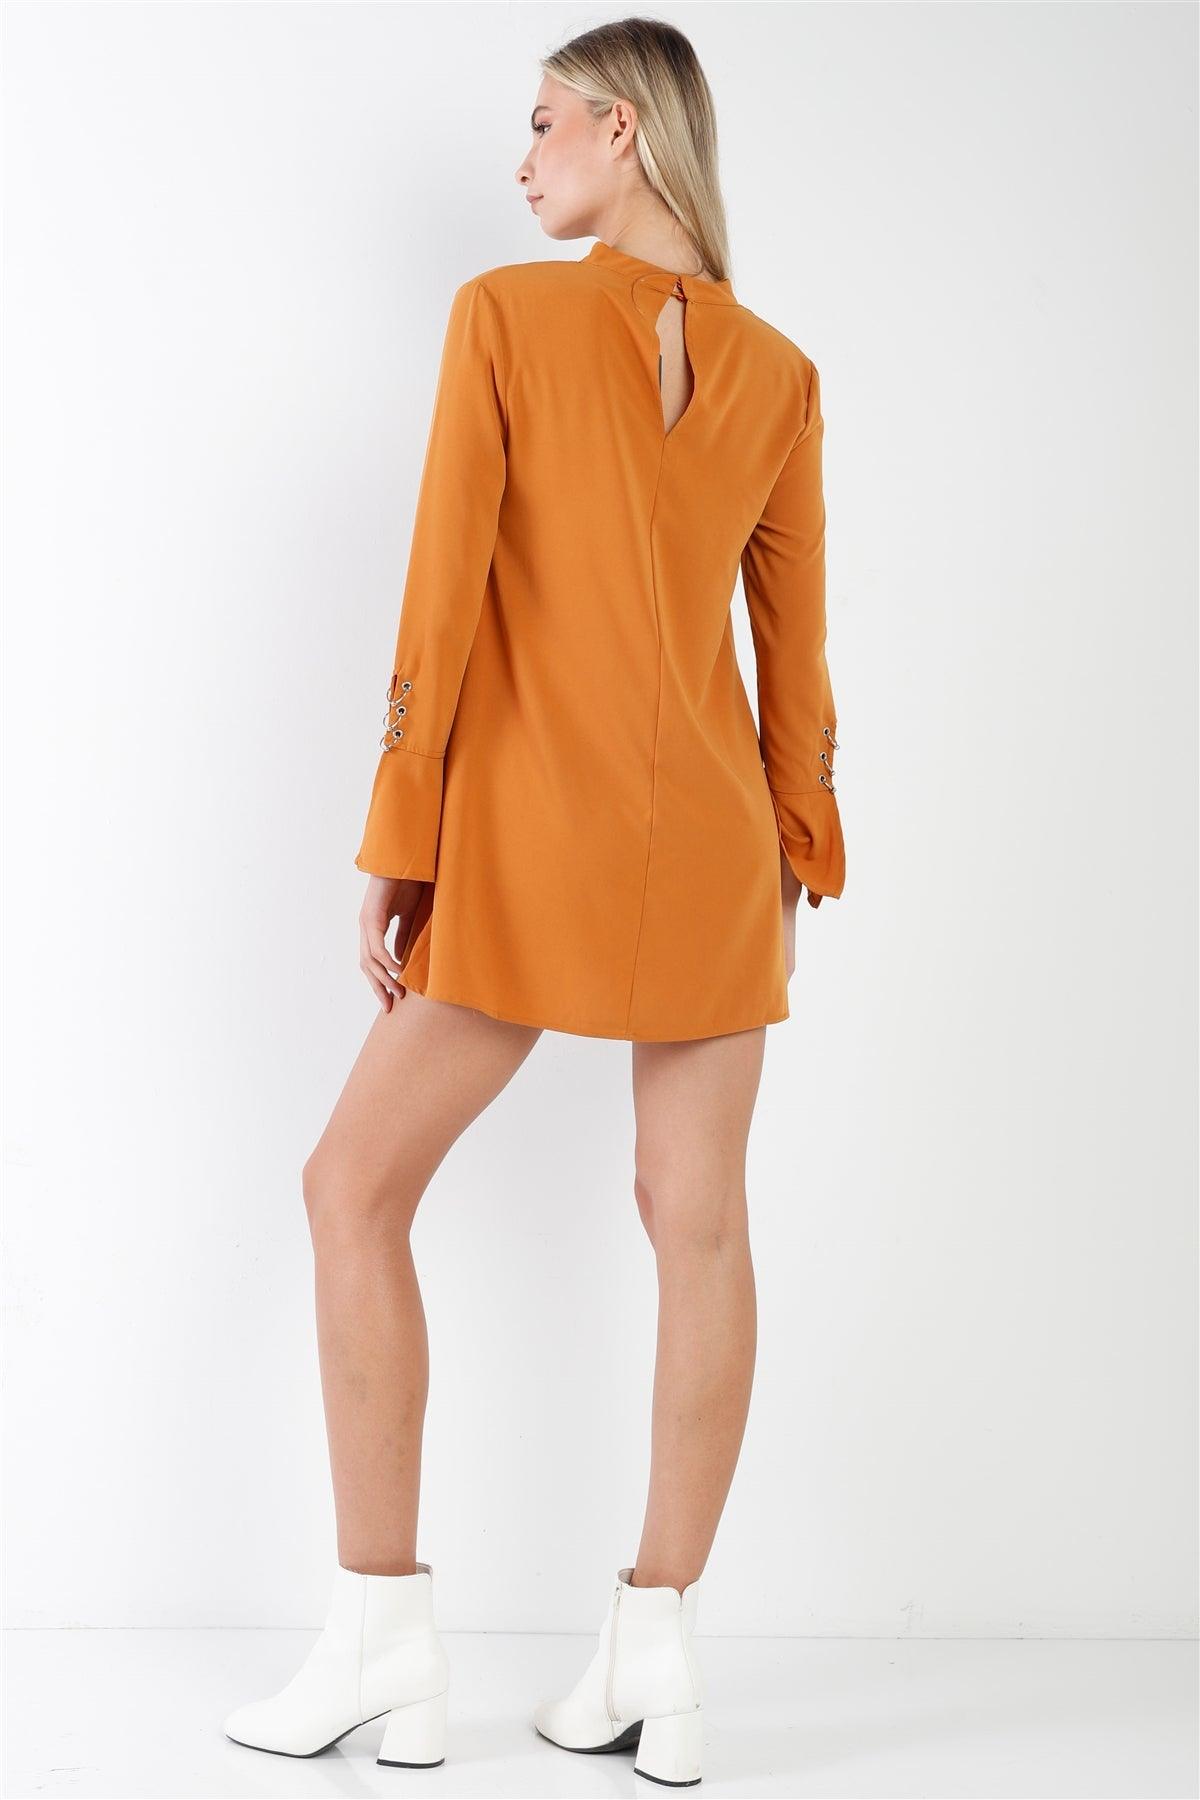 Camel Long Sleeve V-Cut Out Solid Mini Dress /2-2-2